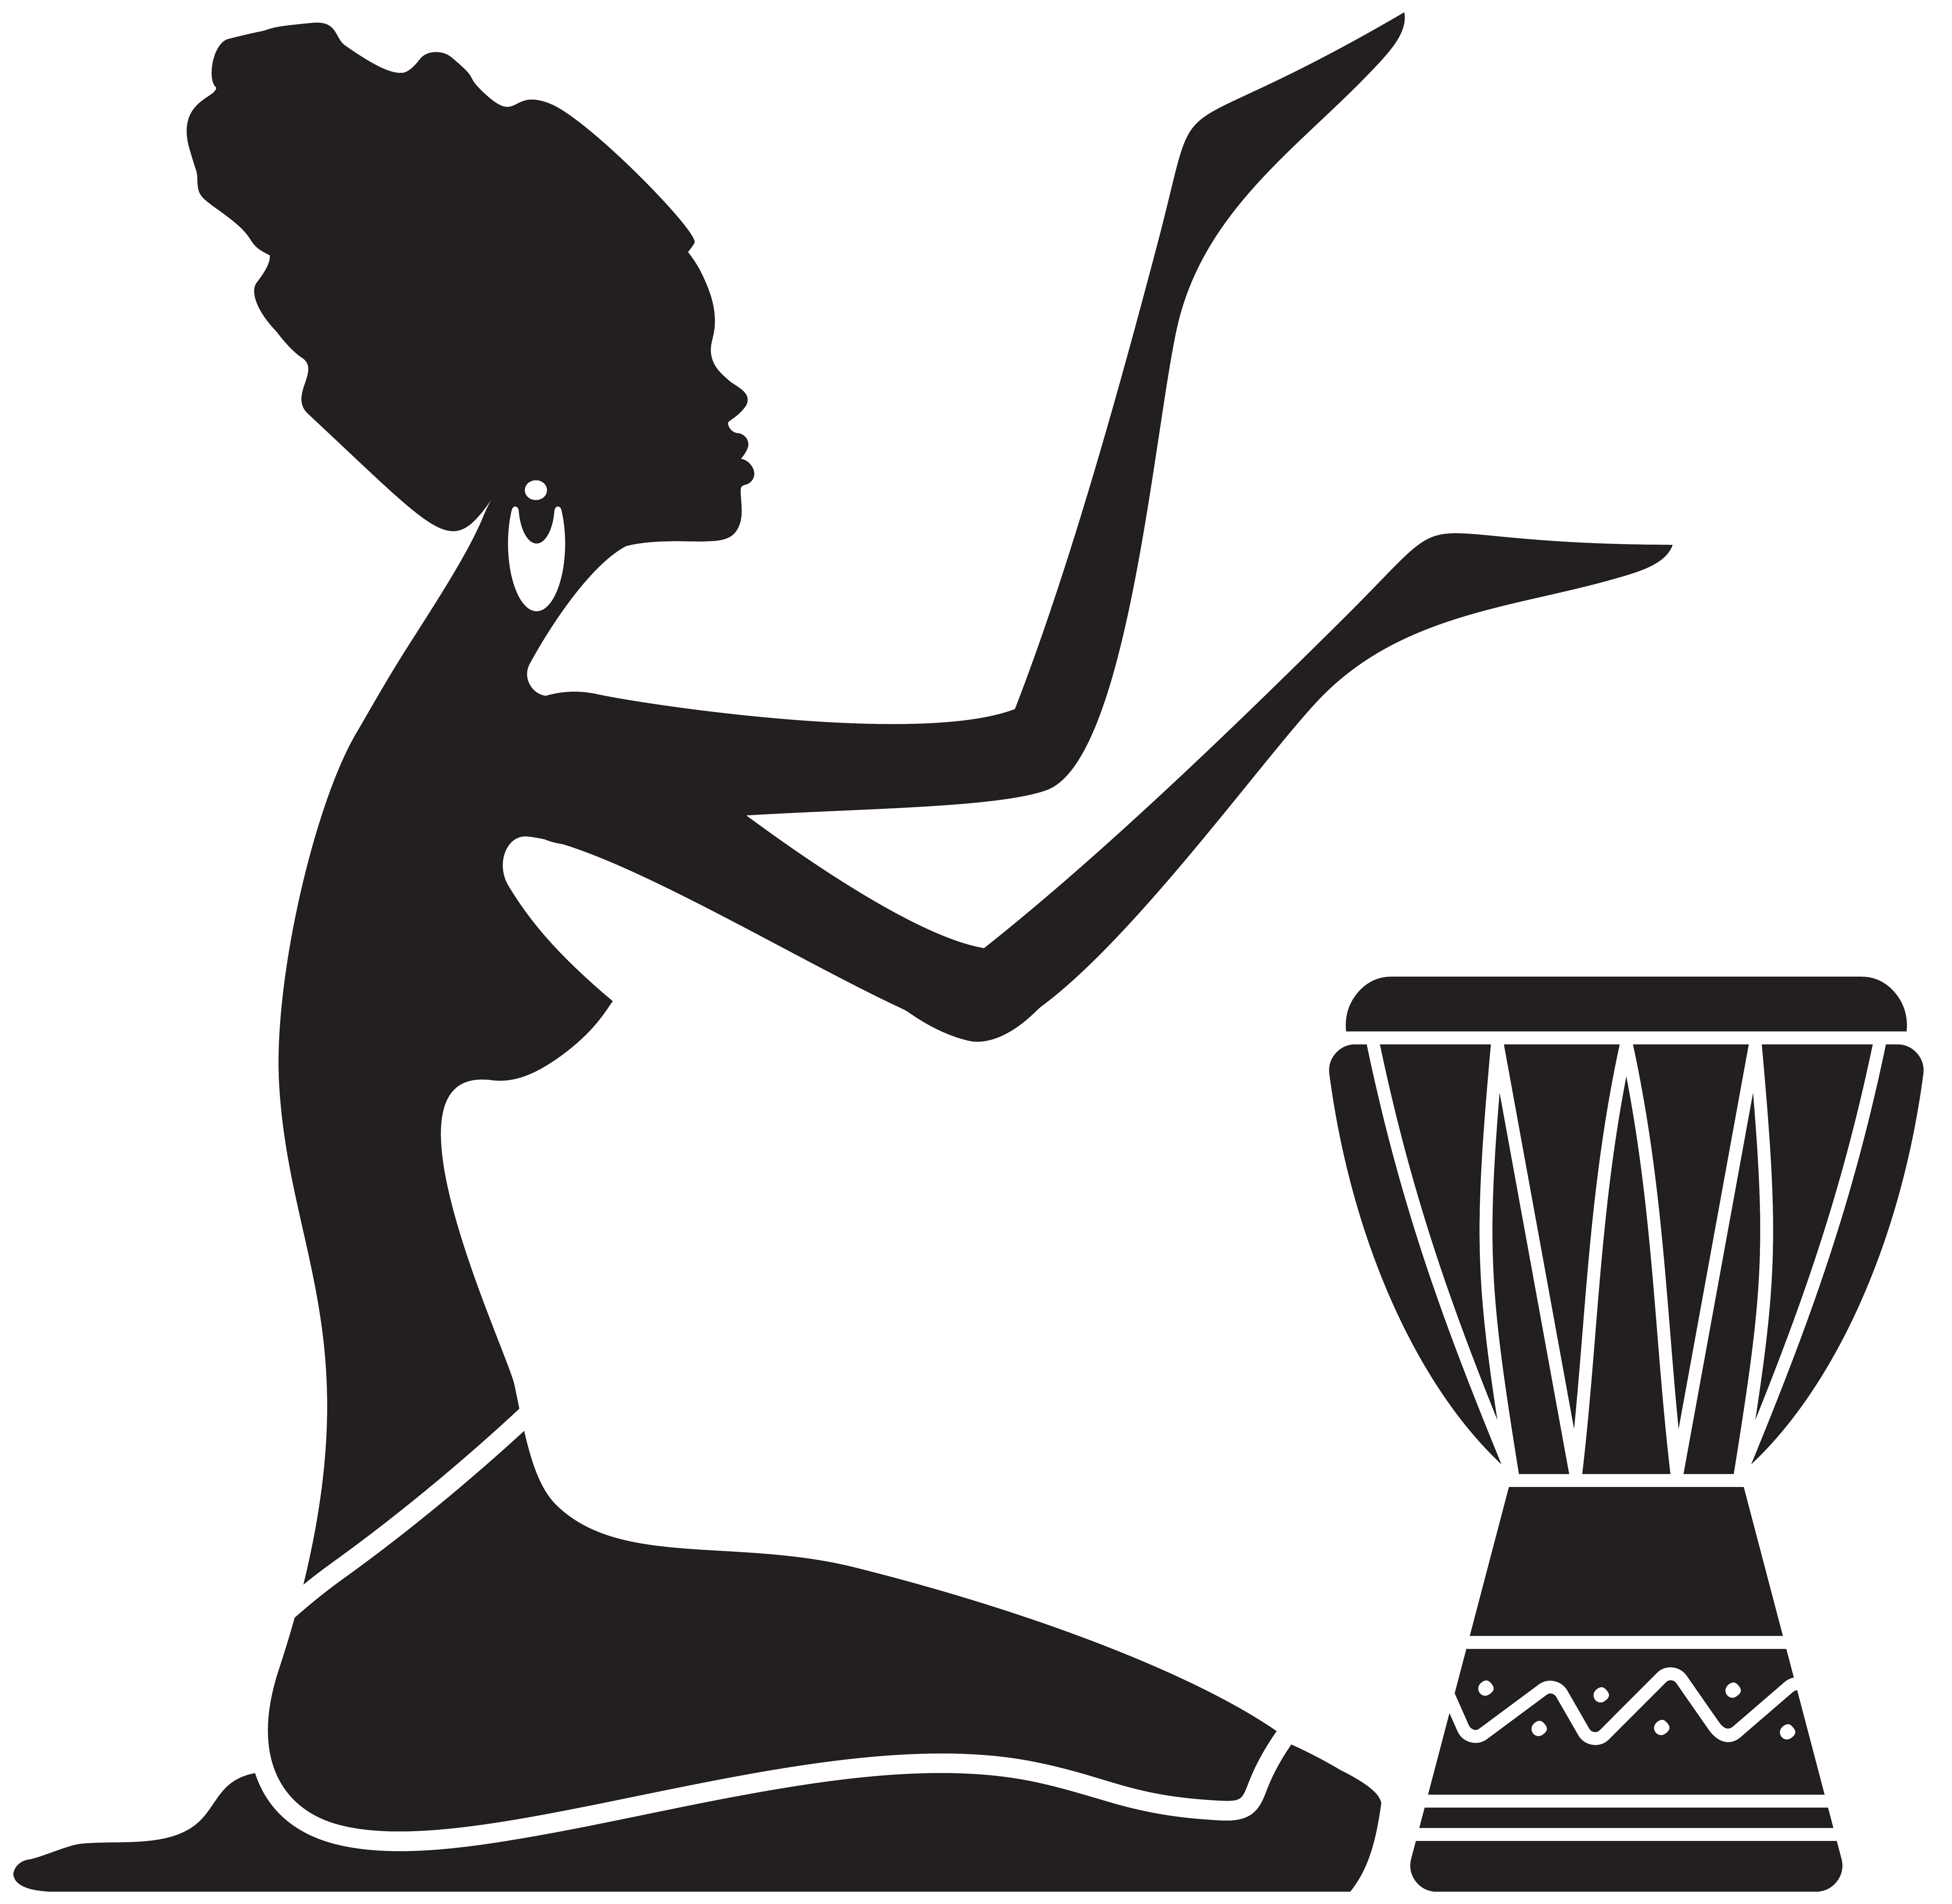 african woman silhouette clip art